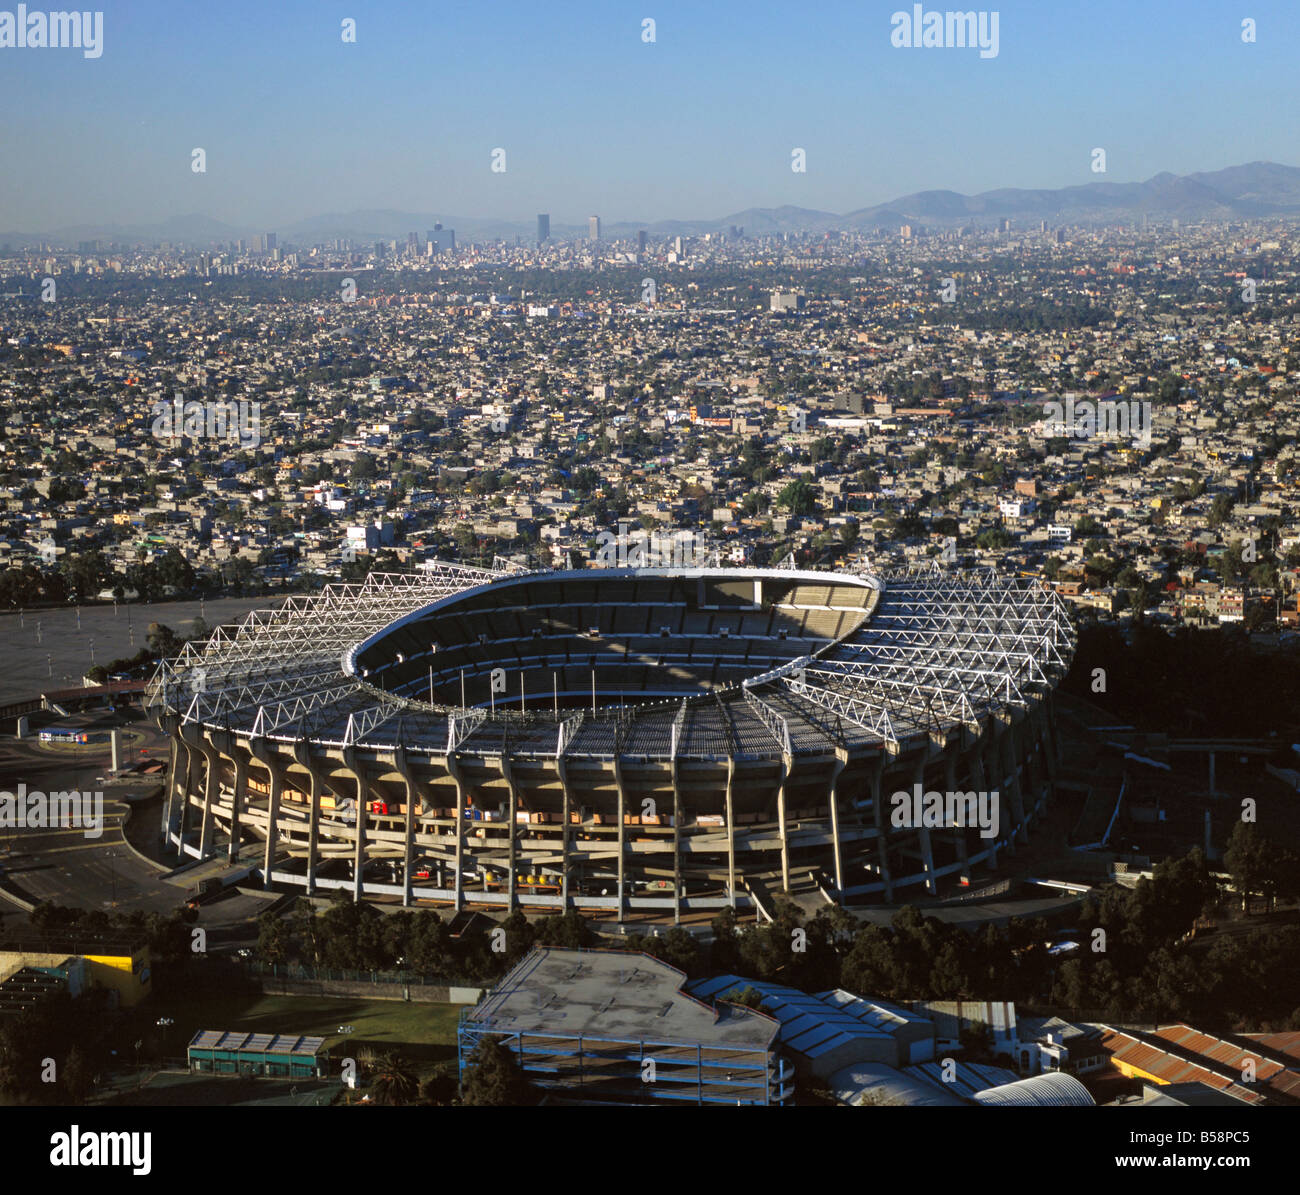 Azteca stadium hi-res stock photography and images - Alamy